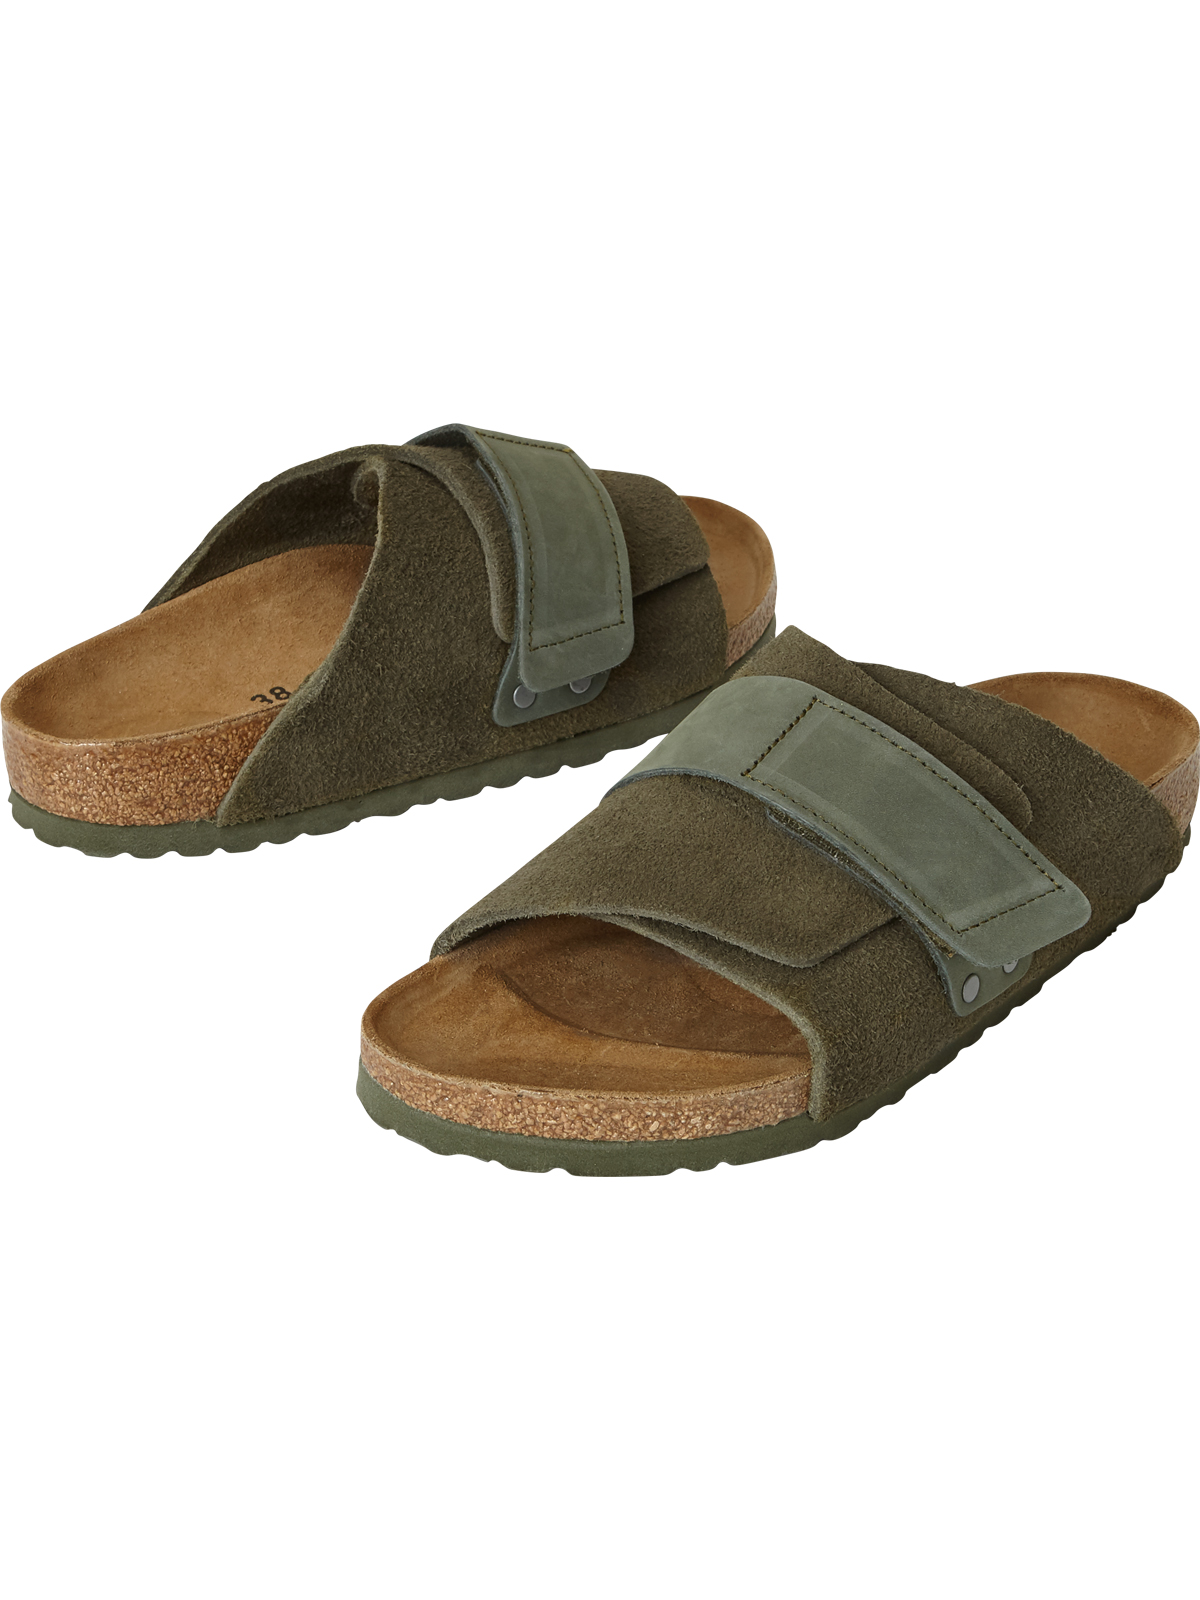 Custom Birkenstock Sandals (Read Description) EU 38. US 7-7.5